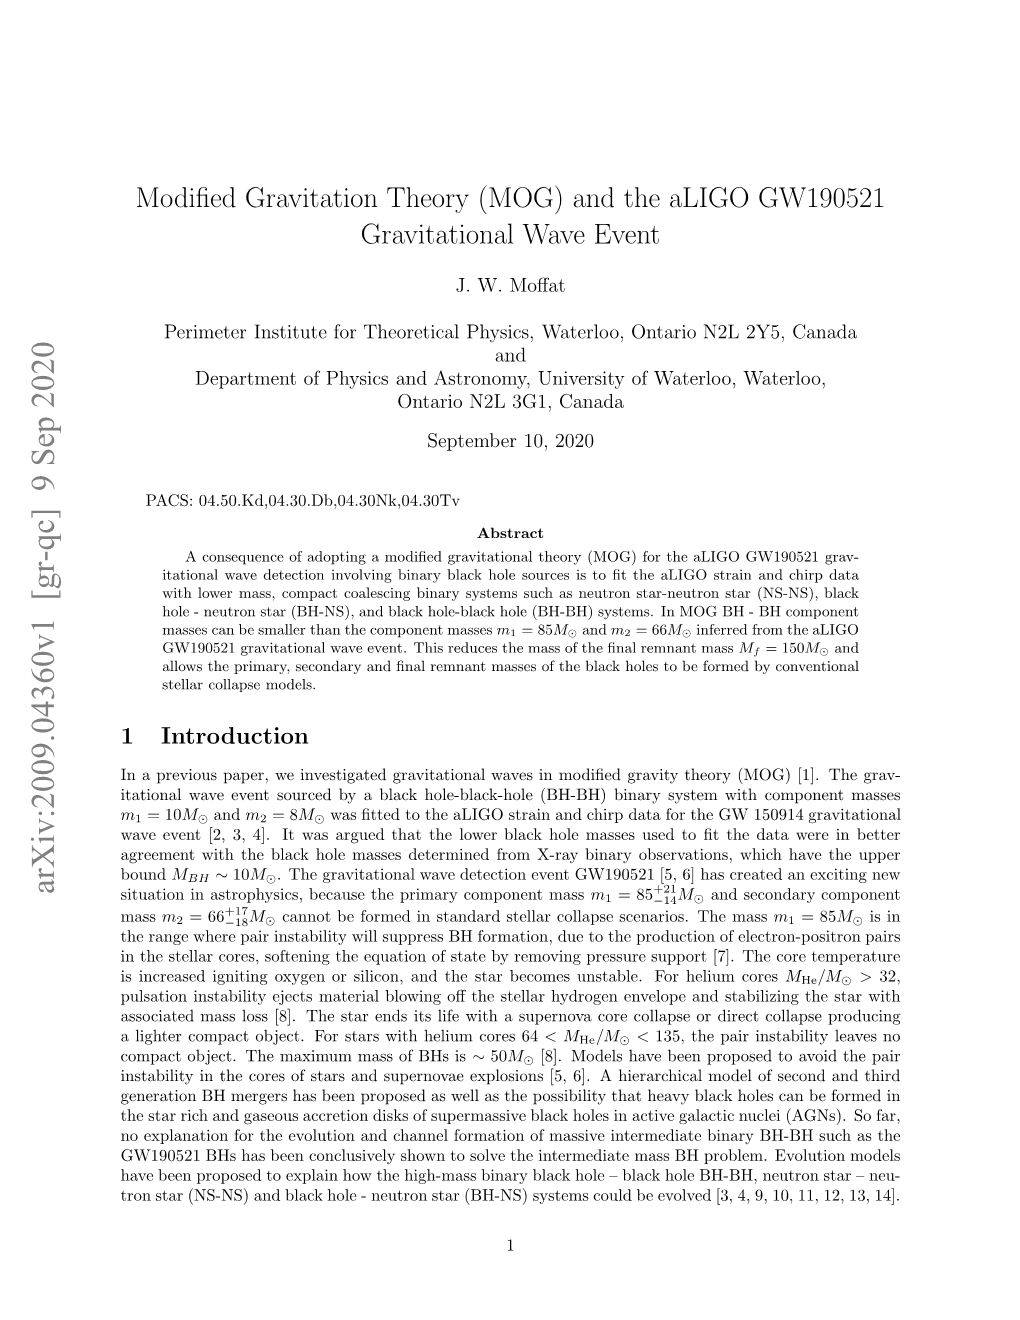 Modified Gravitation Theory (MOG) and the Aligo GW190521 Gravitational Wave Event